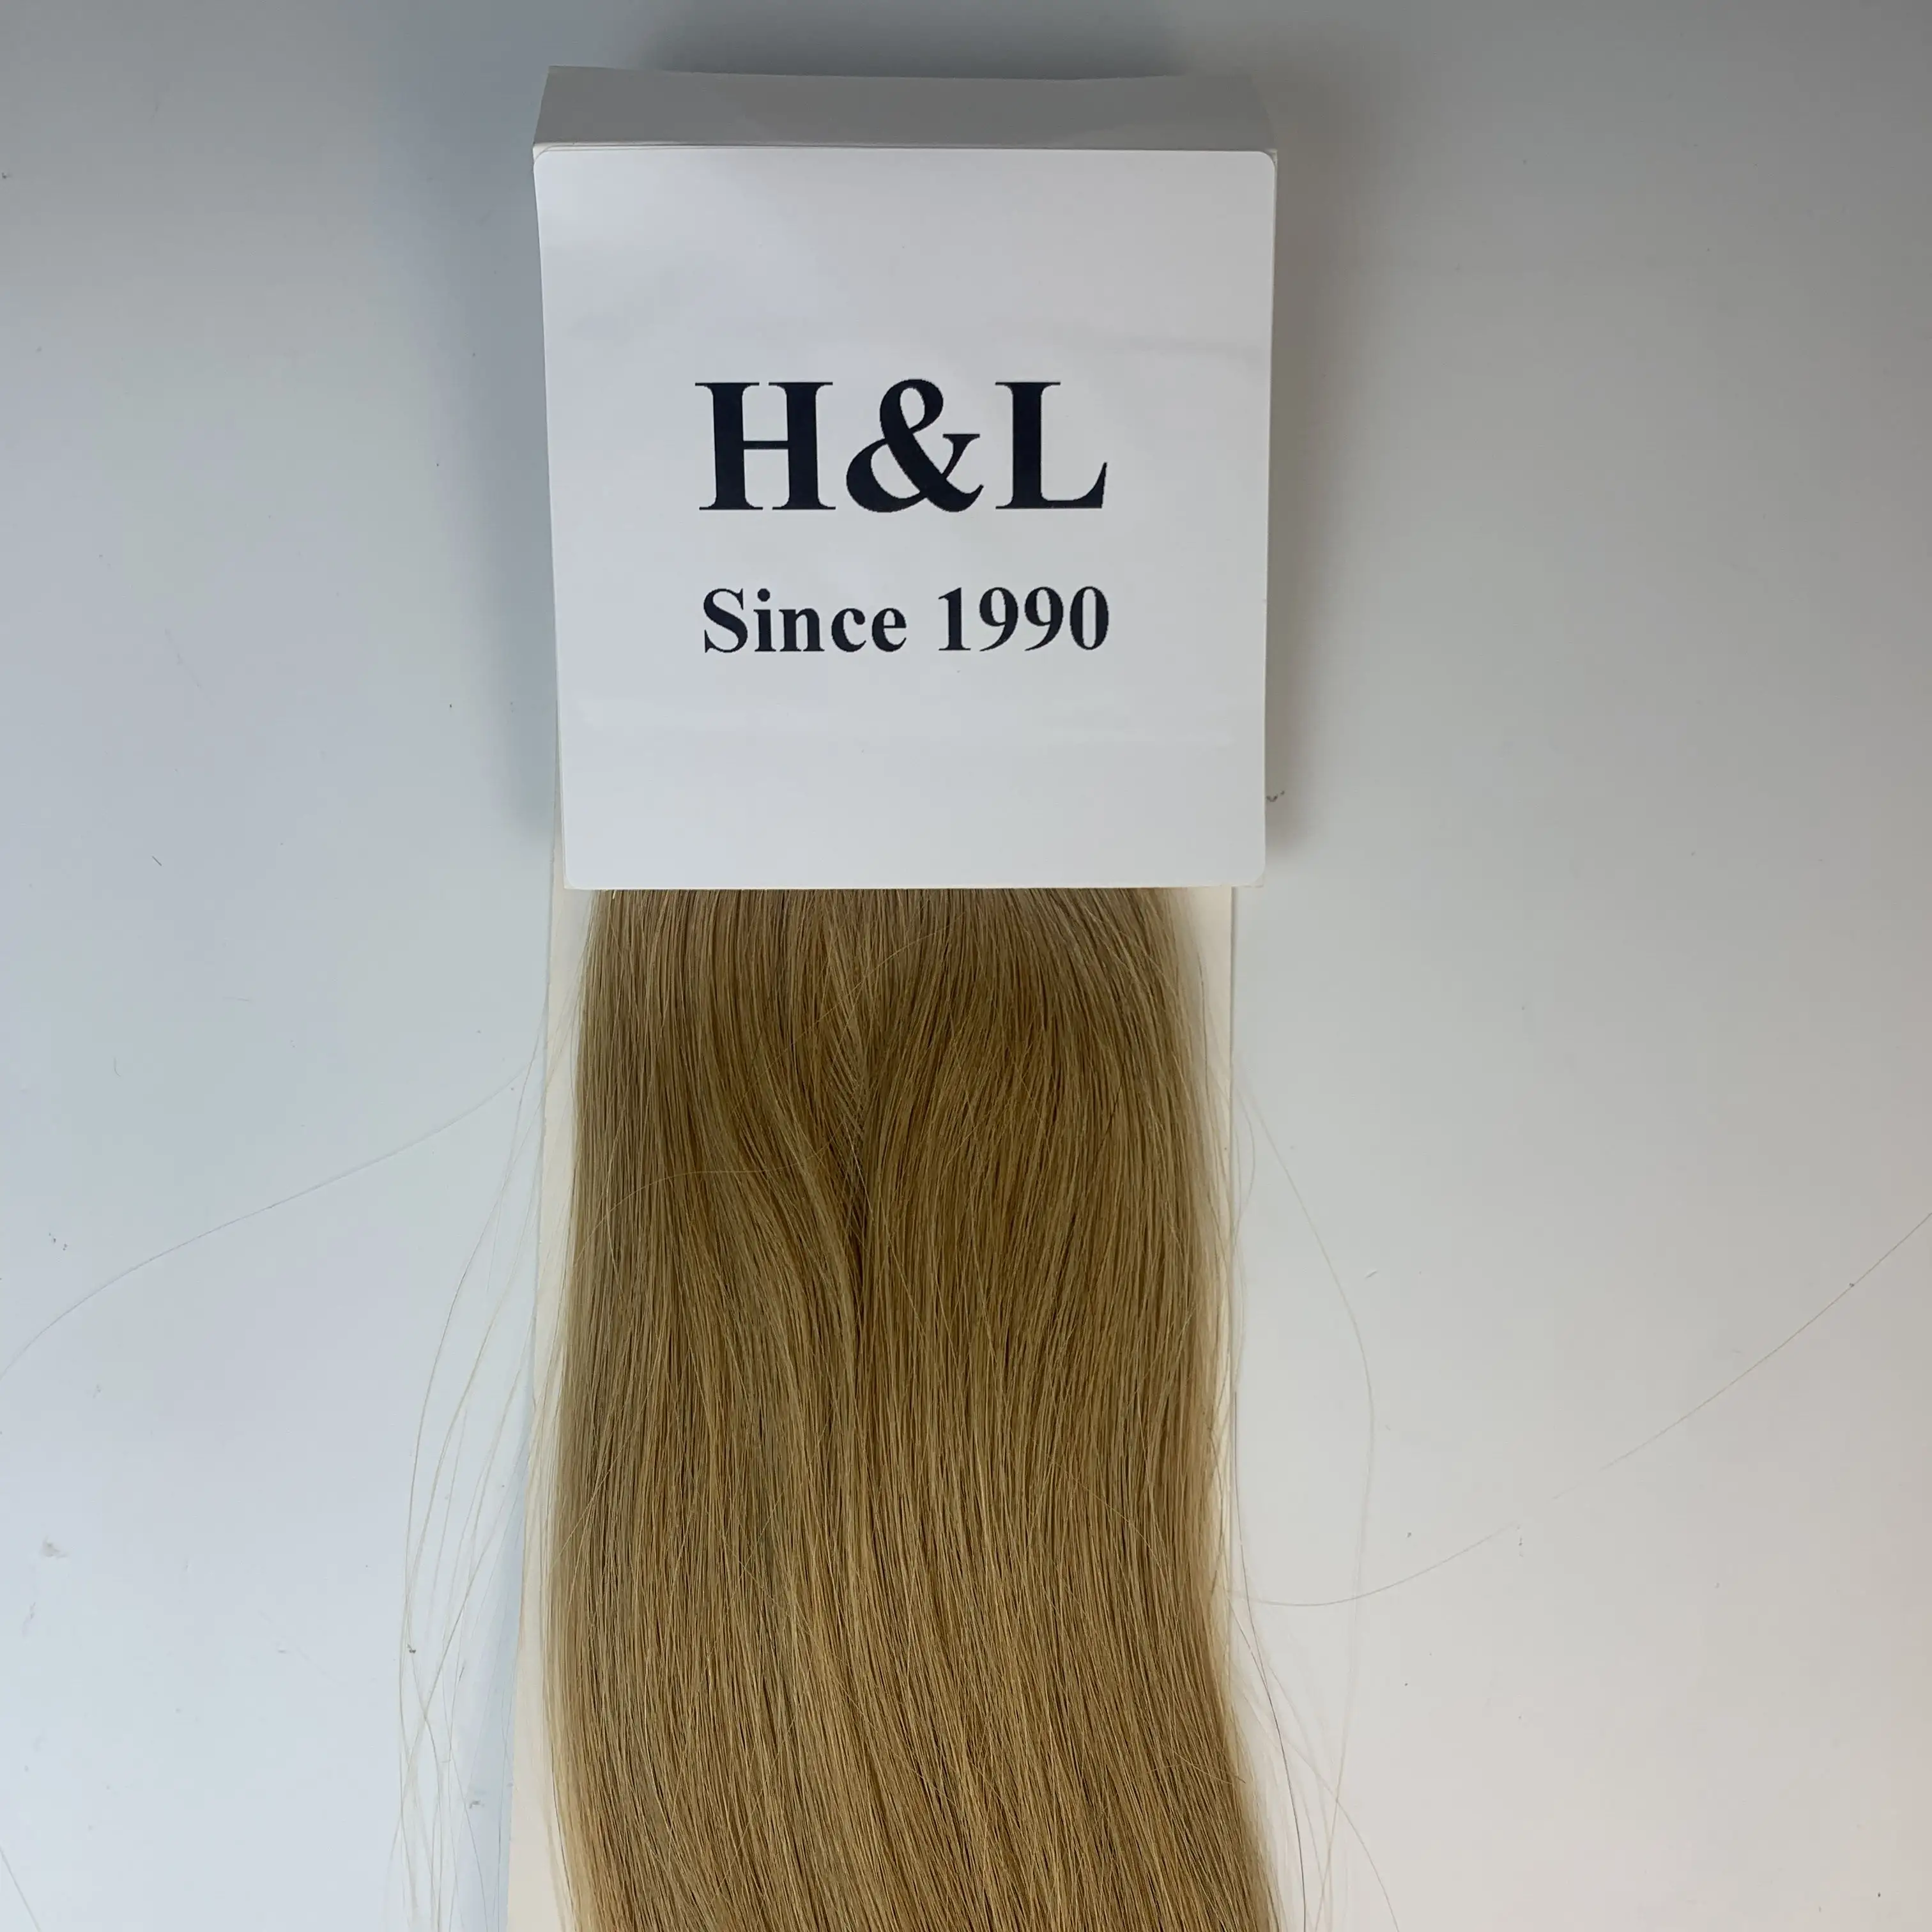 H & L ตั้งแต่ปี1990โรงงานที่ให้มาที่มีคุณภาพสูงเส้นผมมนุษย์ผมเท็จ